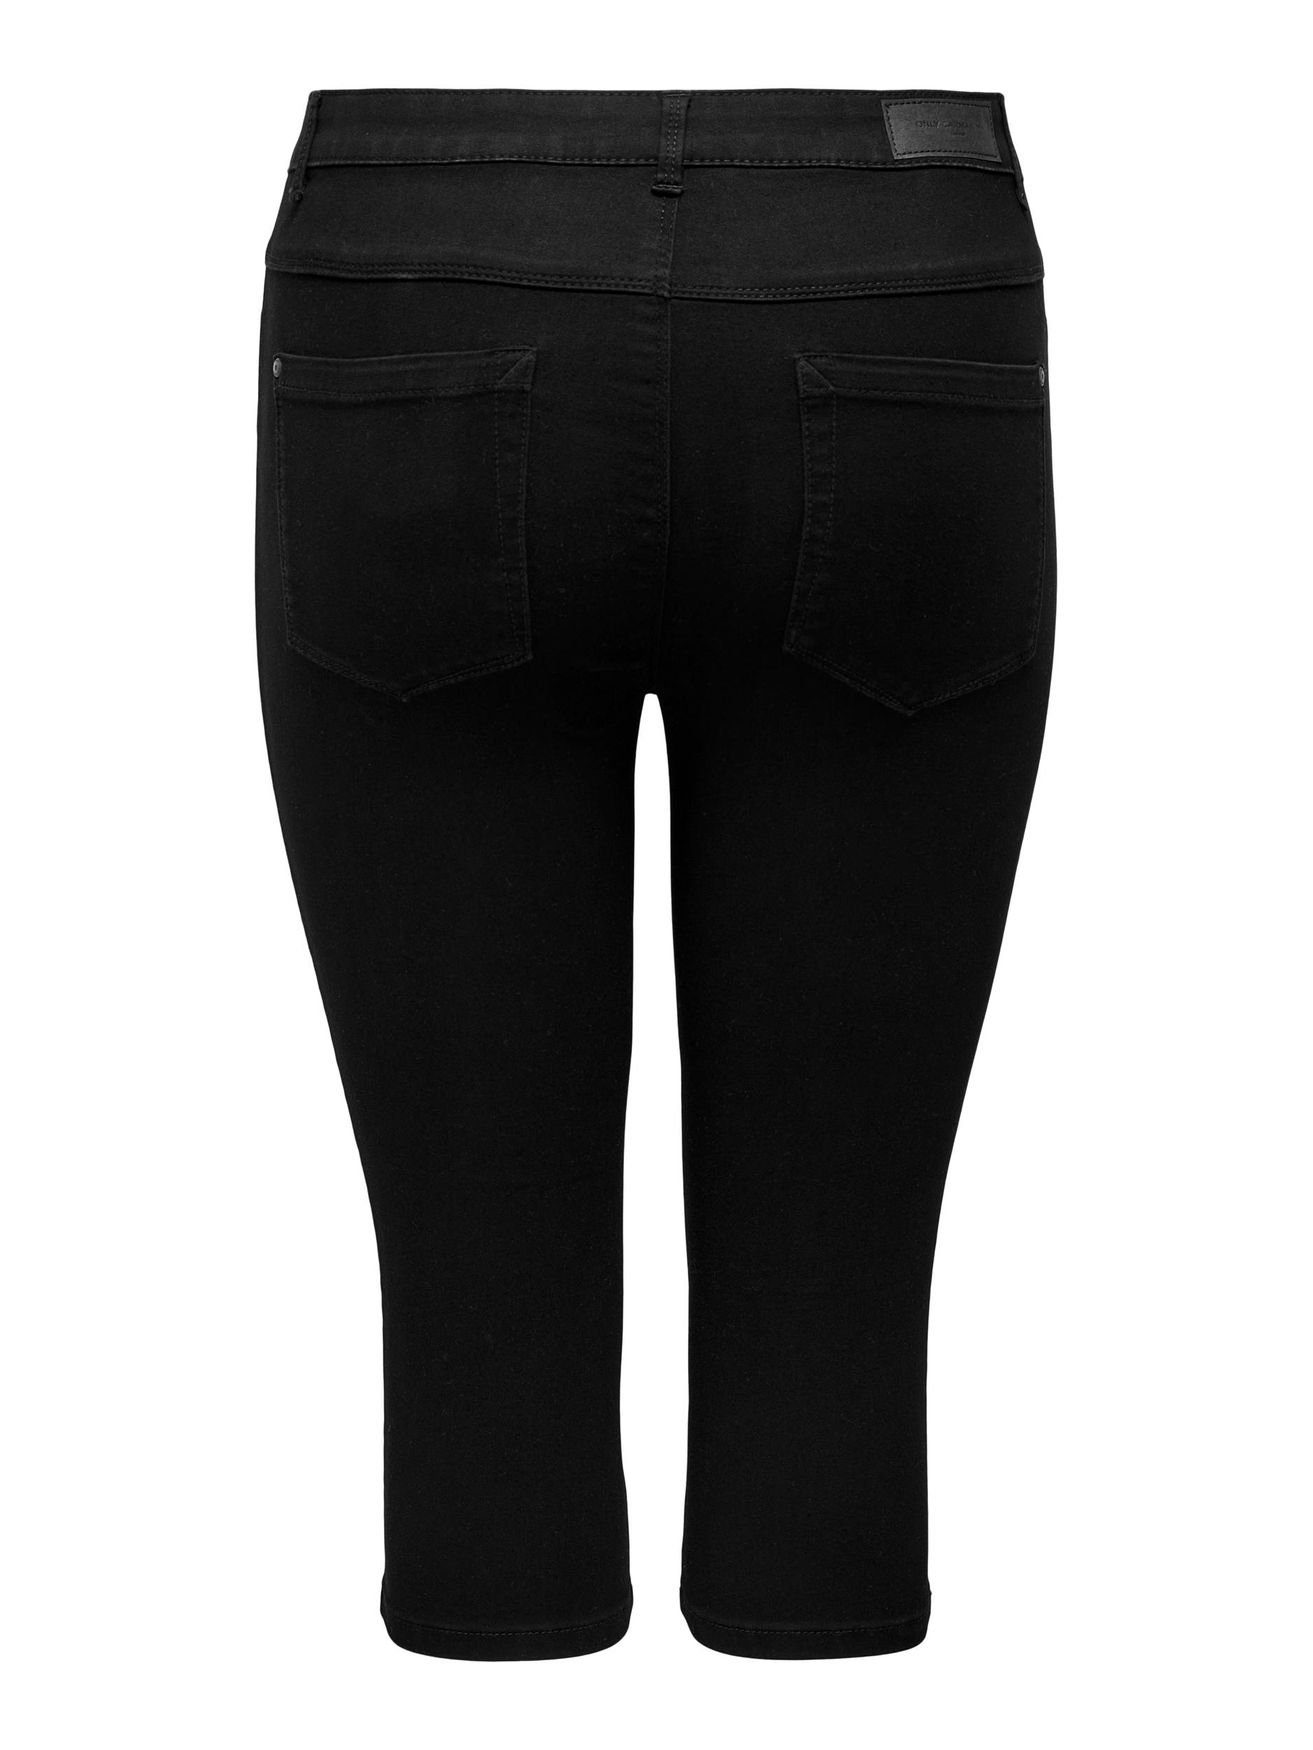 Caprihose Jeans Übergröße Denim Hose CARAUGUSTA Shorts Schwarz 3/4Capri in CARMAKOMA Plus ONLY Size 4794